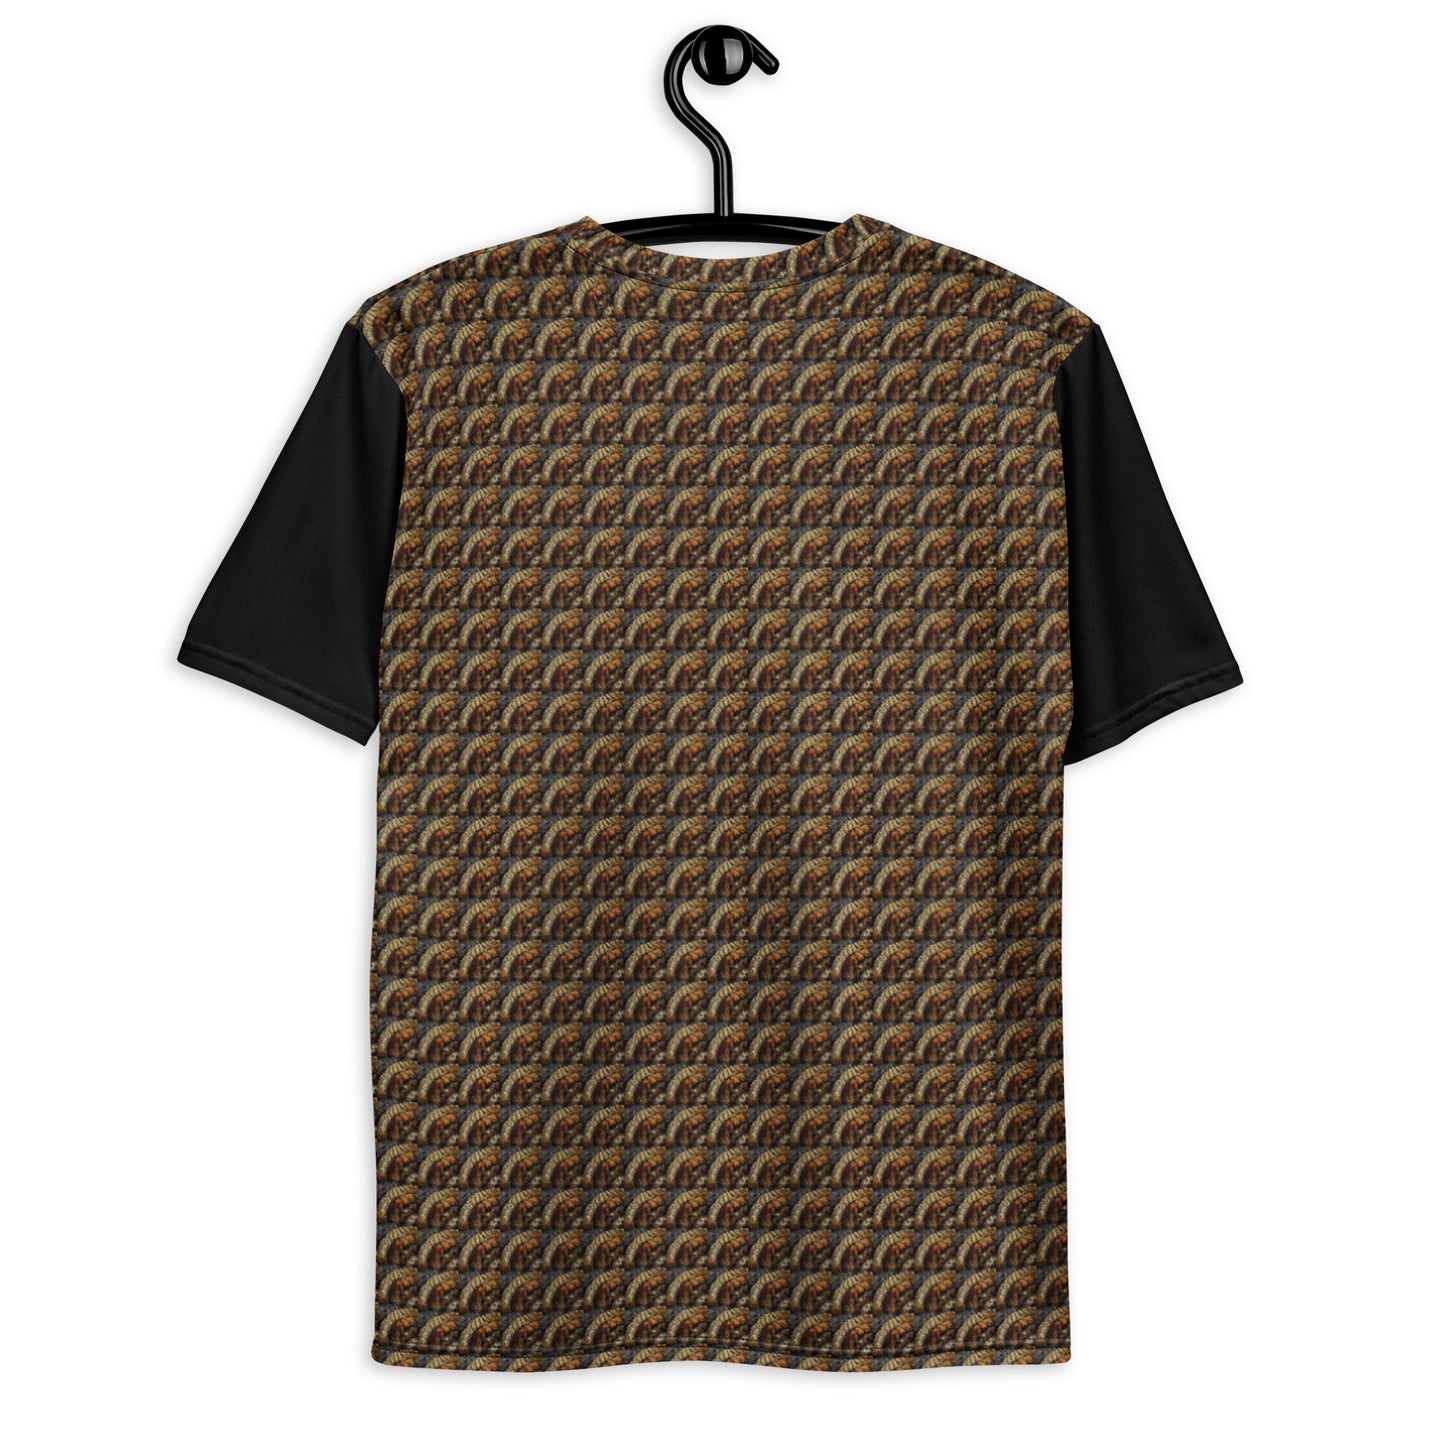 Men's t-shirt in snake pattern Official primitive store 